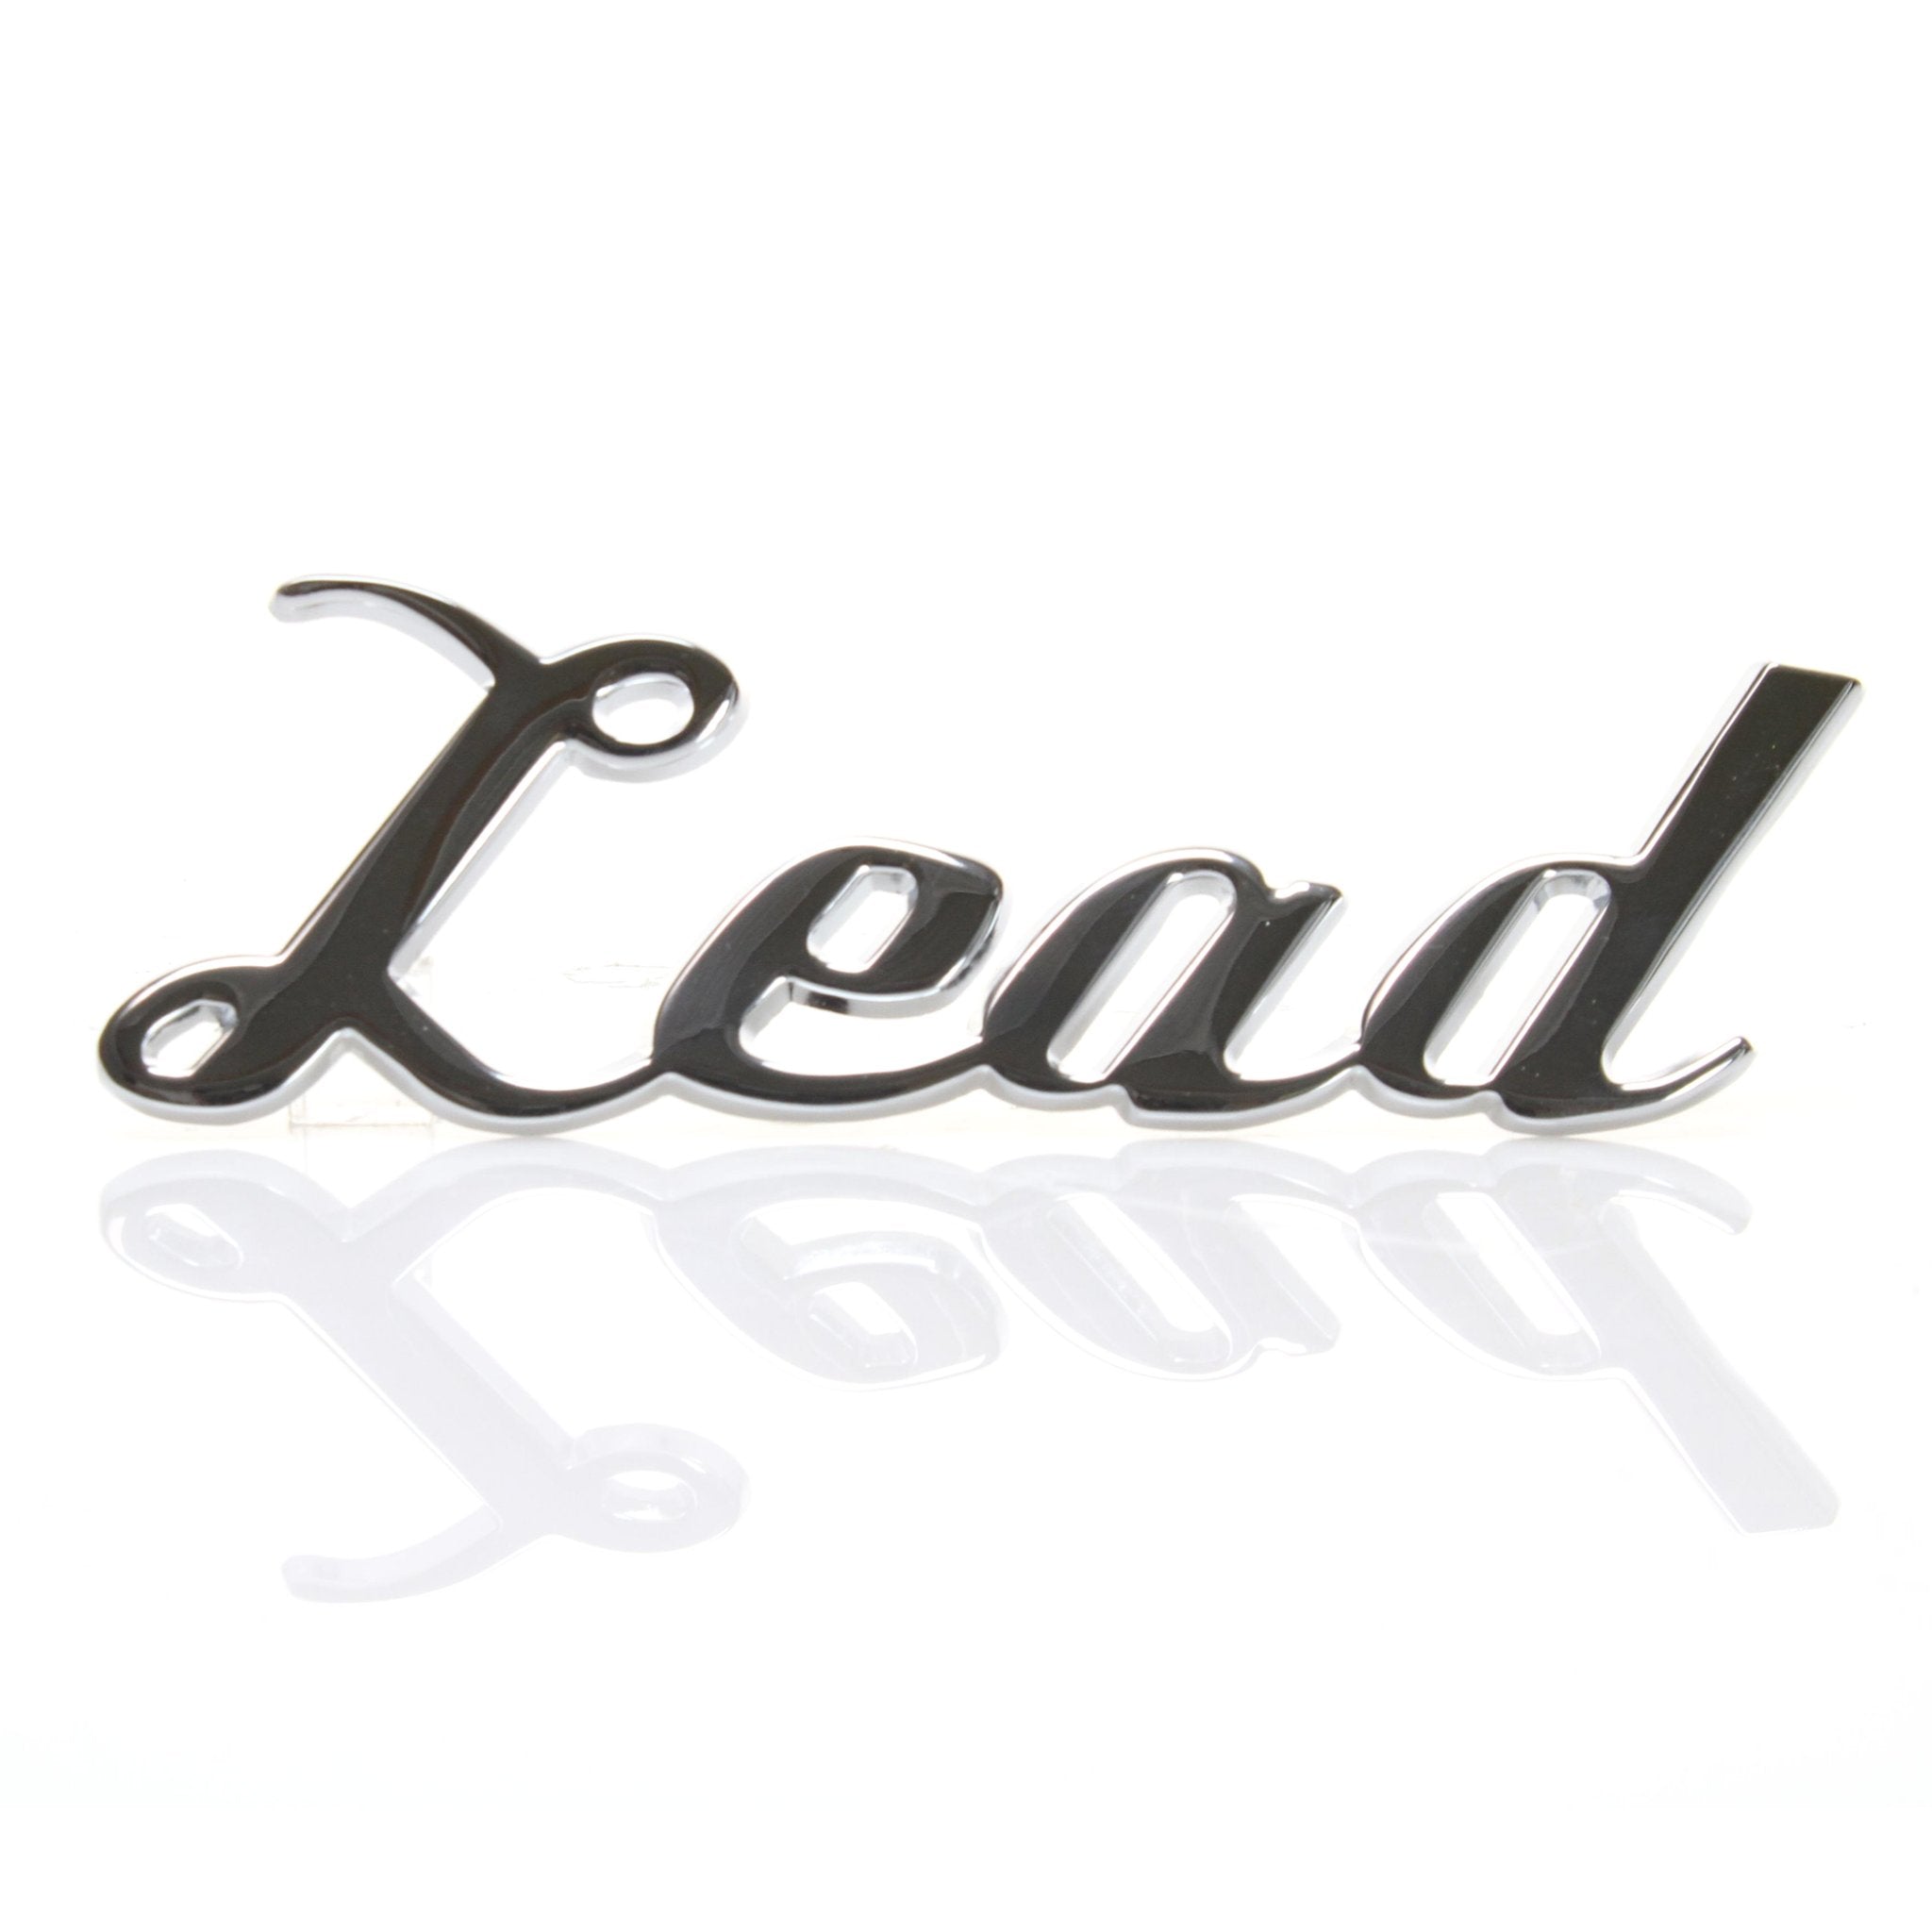 Chrome Metal "Lead" Script Letter Grille Fender Emblem Badge Car Truck Hot Rod